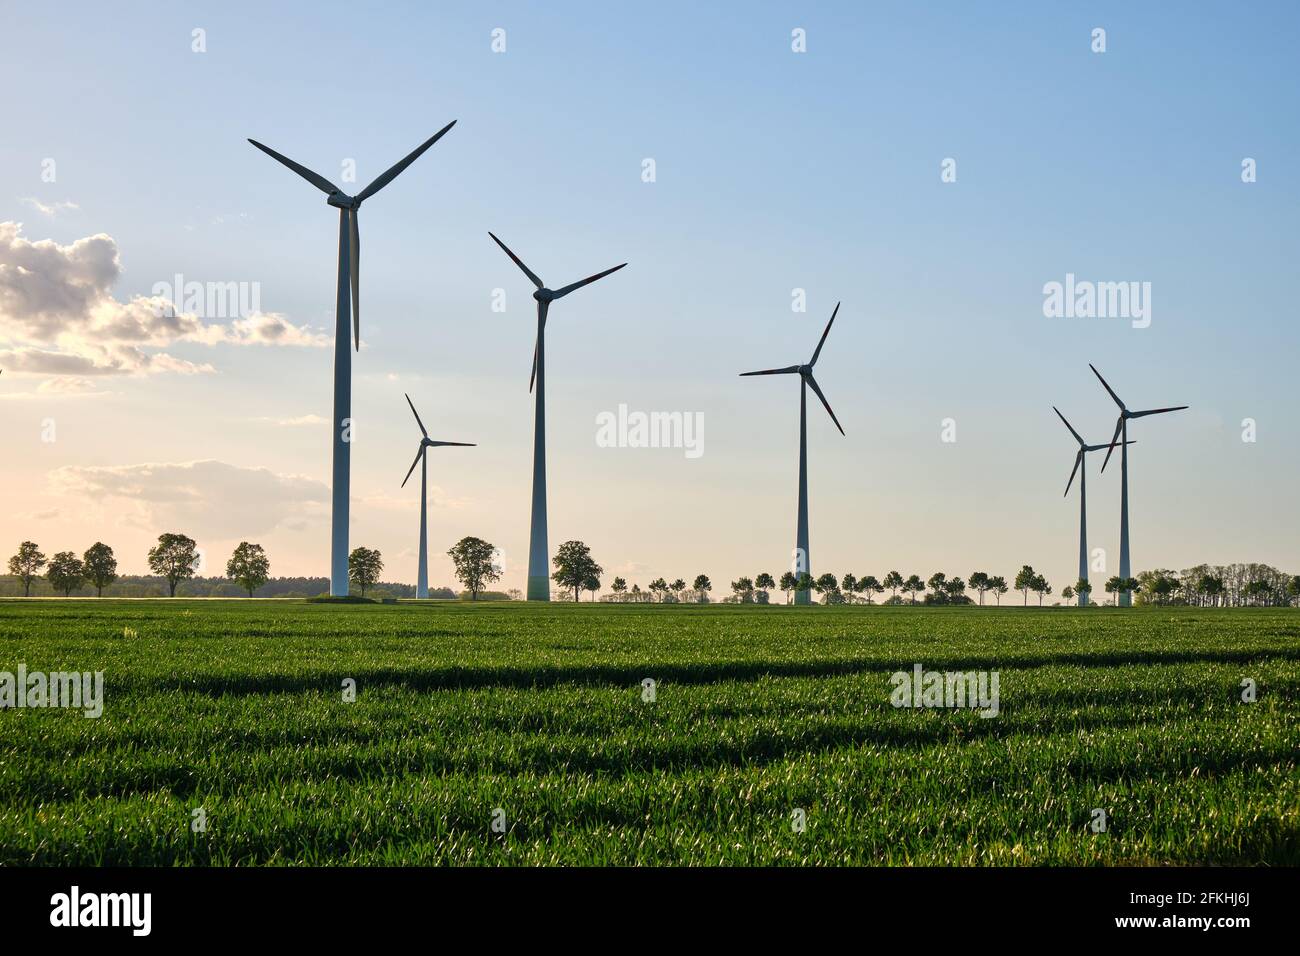 Wind turbines in a grain field with back light seen in Germany Stock Photo